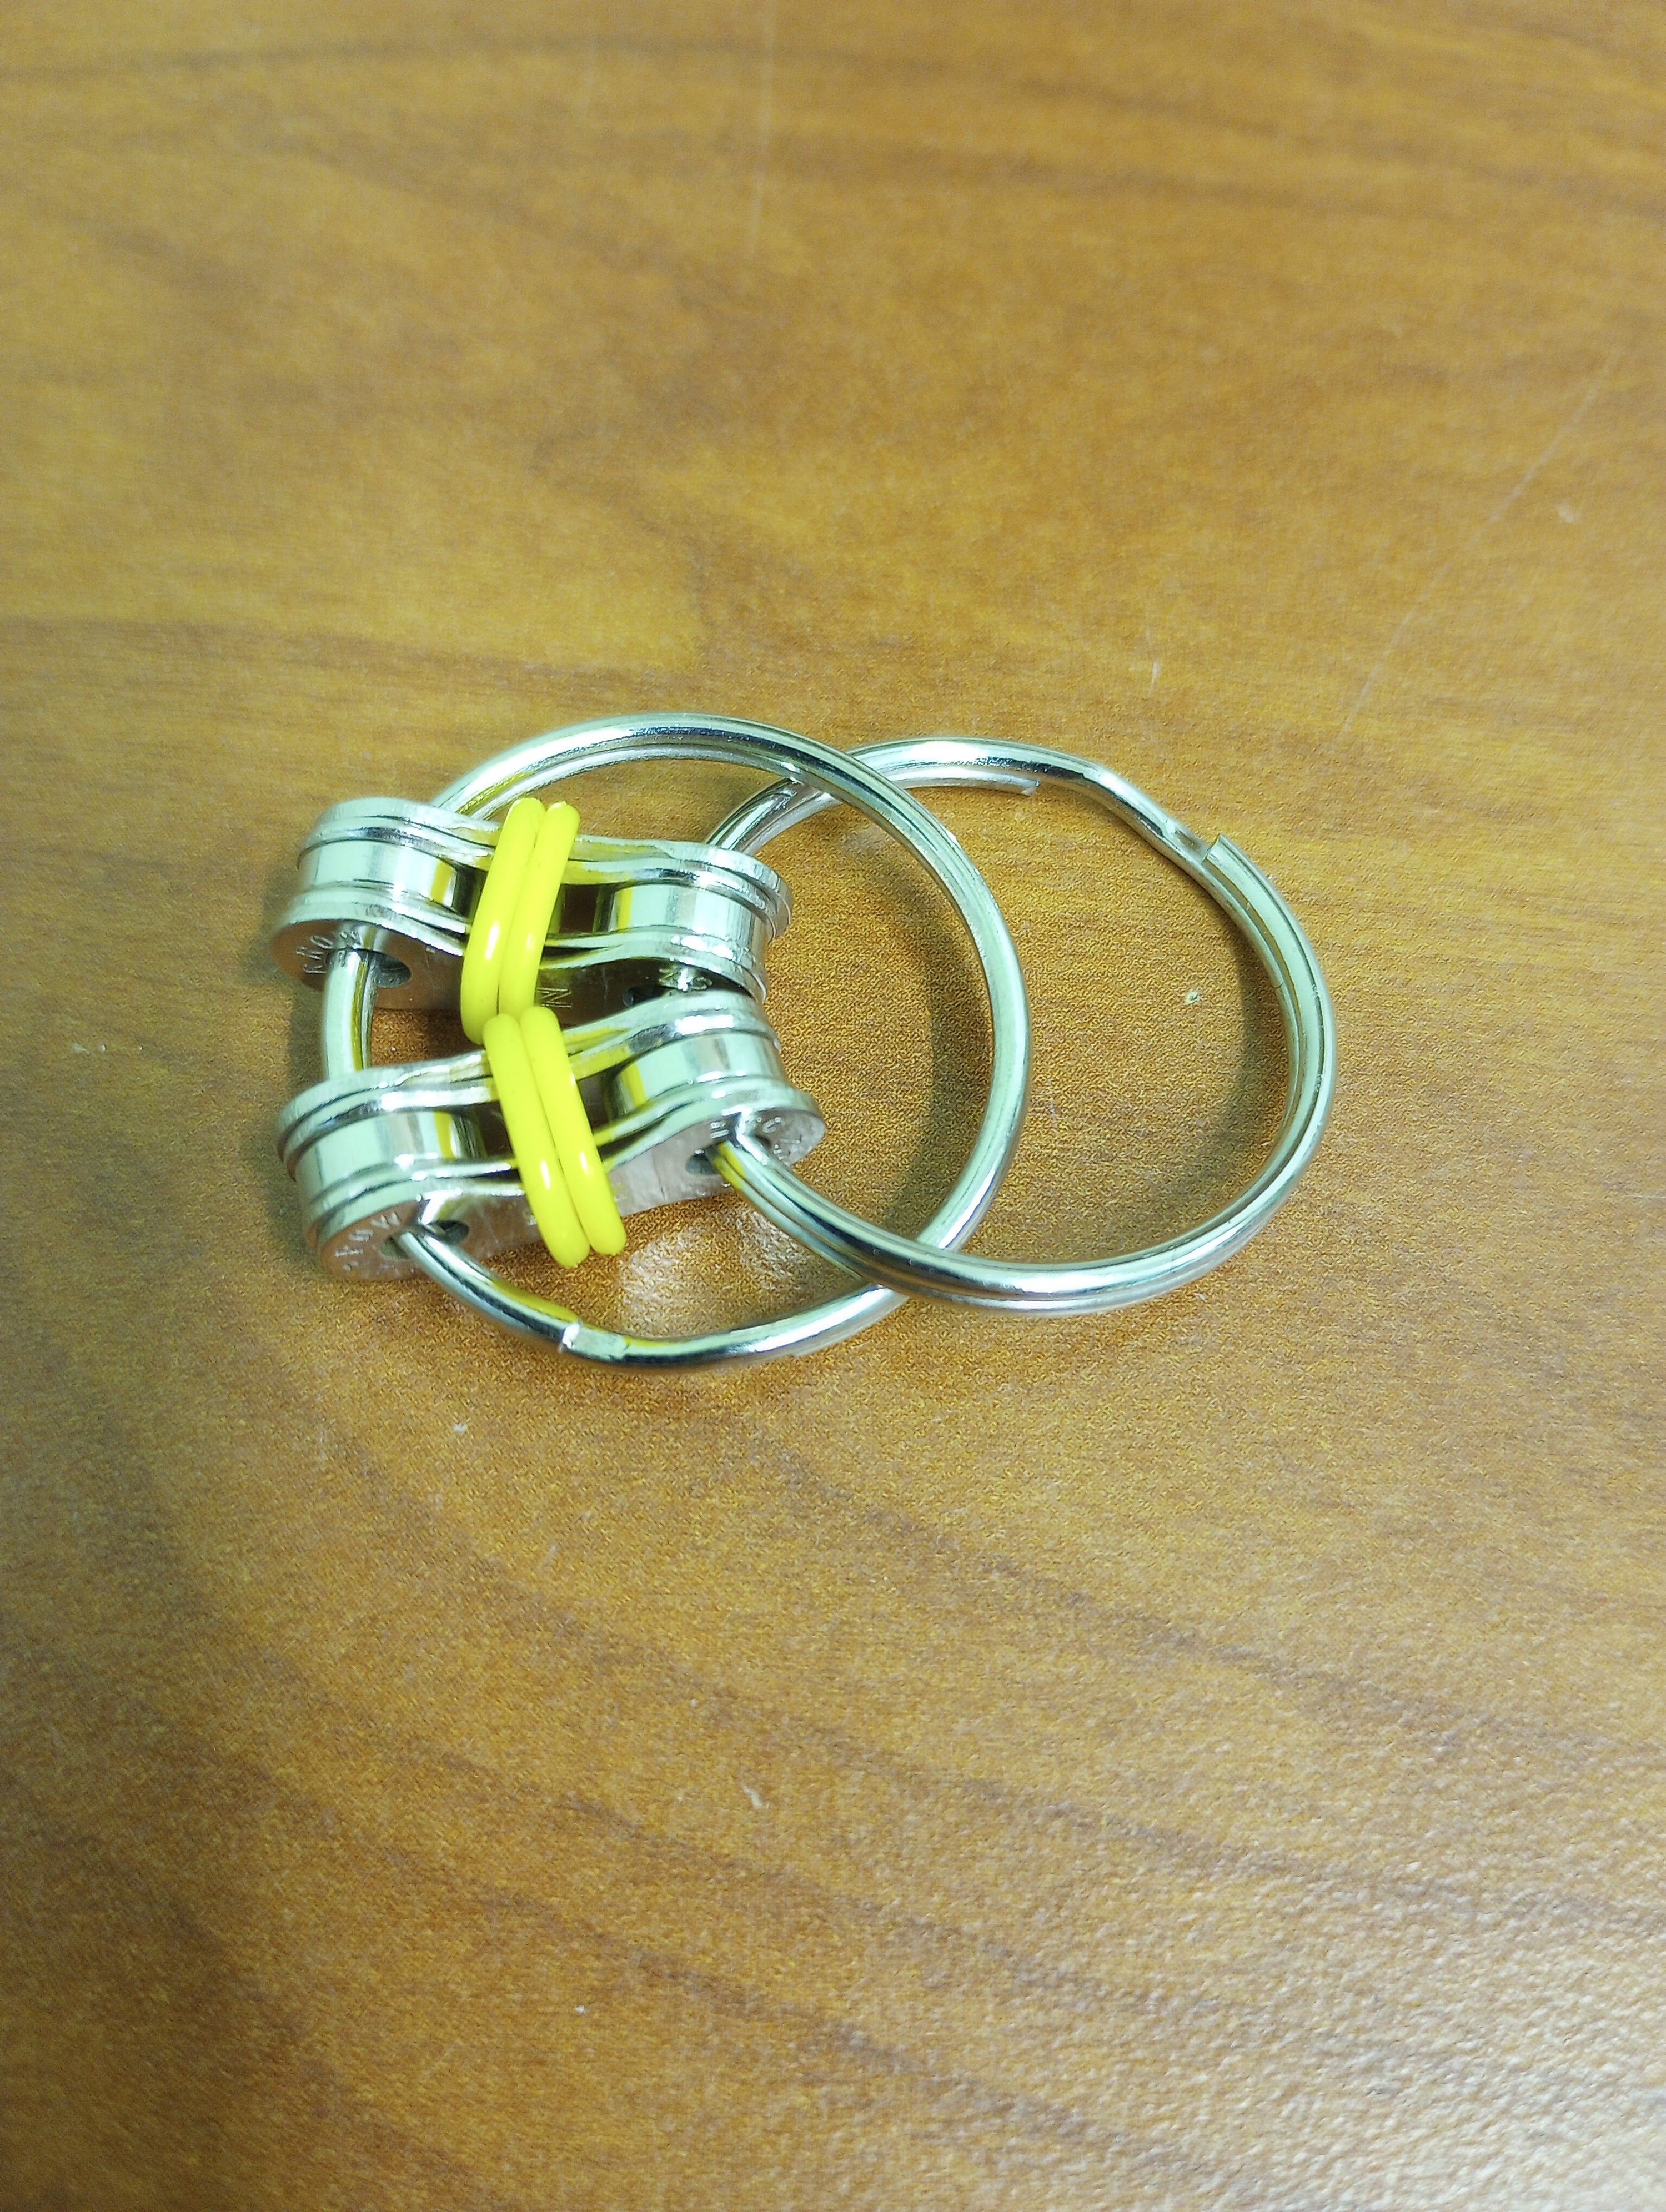 The yellow Bike Chain Fidget.